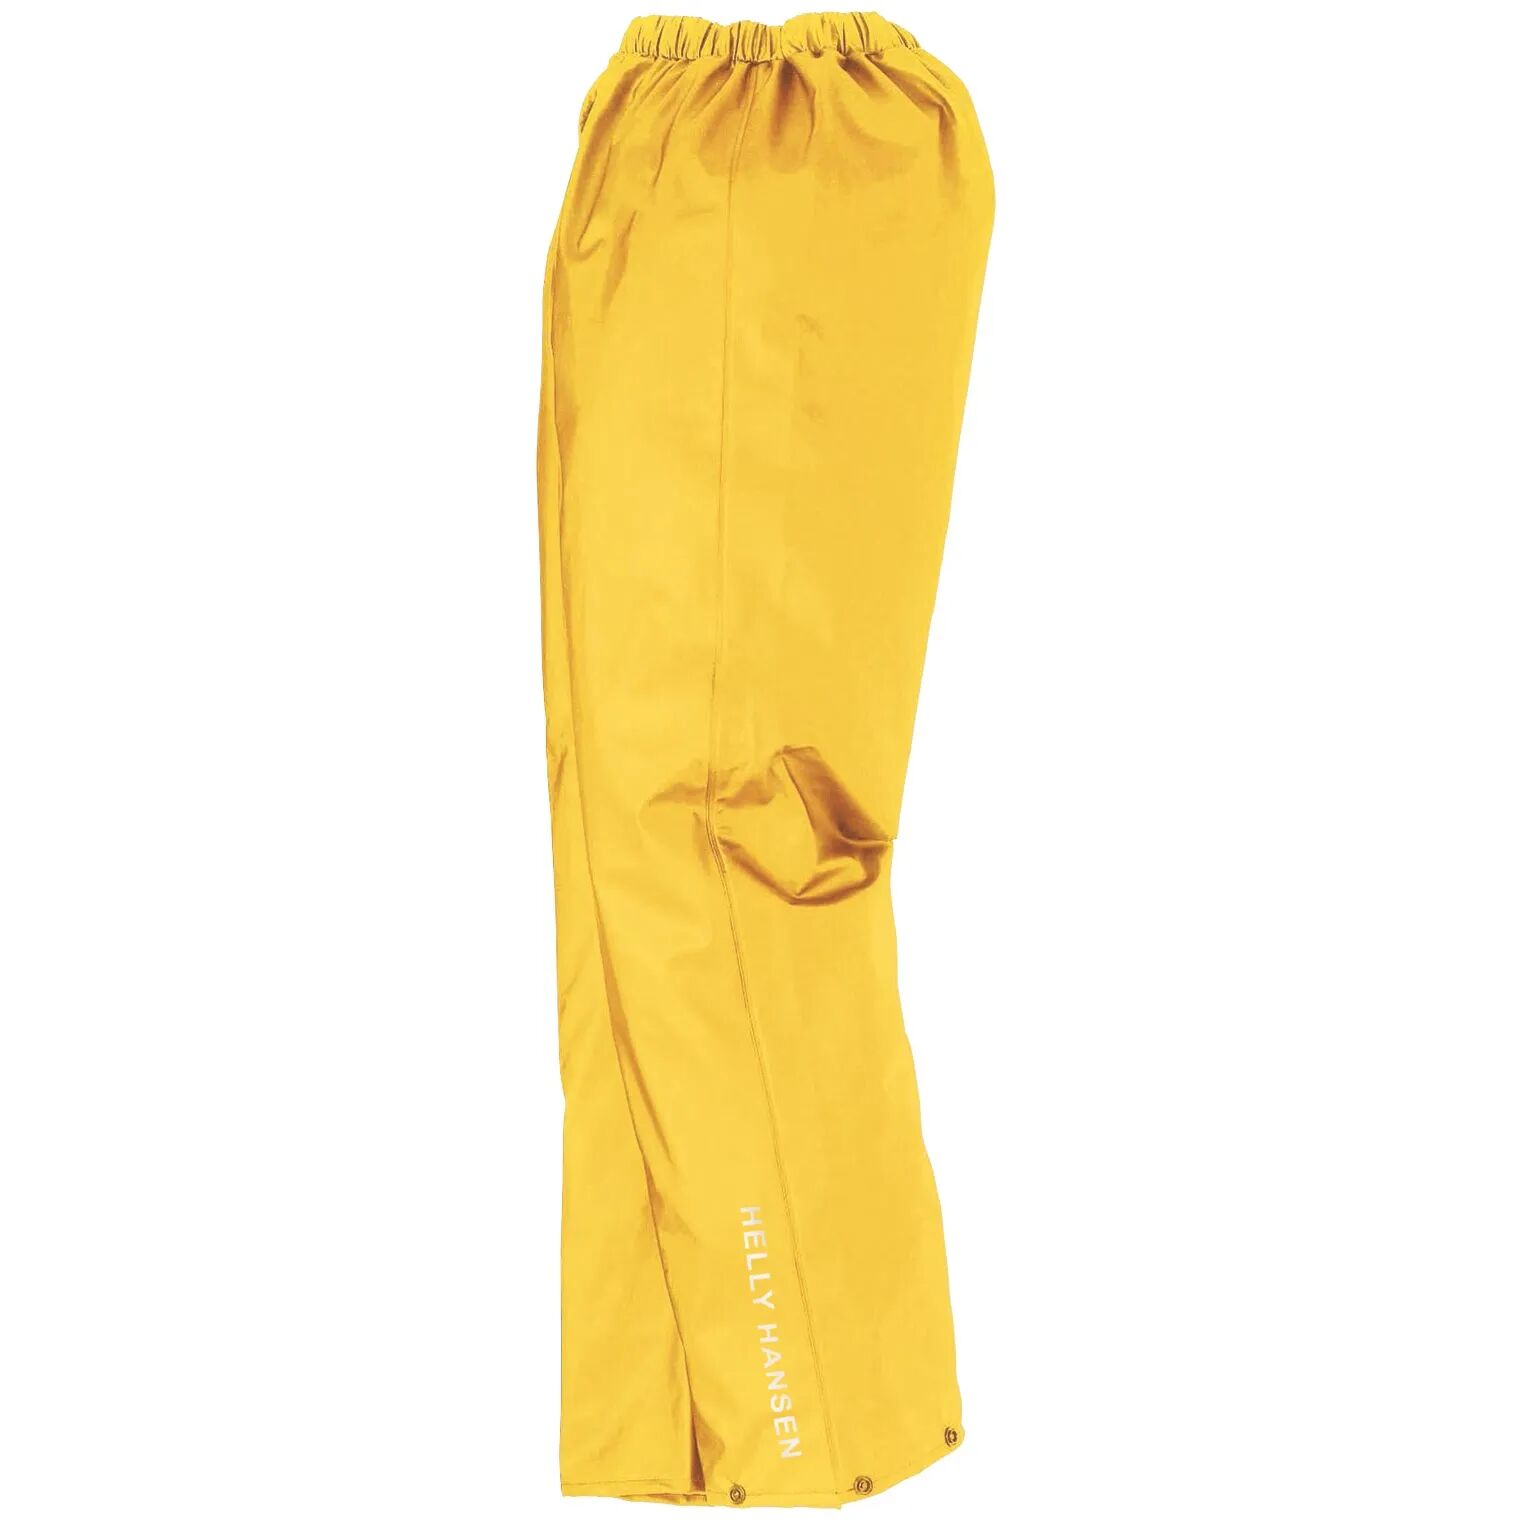 HH Workwear Helly Hansen WorkwearVoss Lightweight Windproof Rain Pants Yellow XXXL